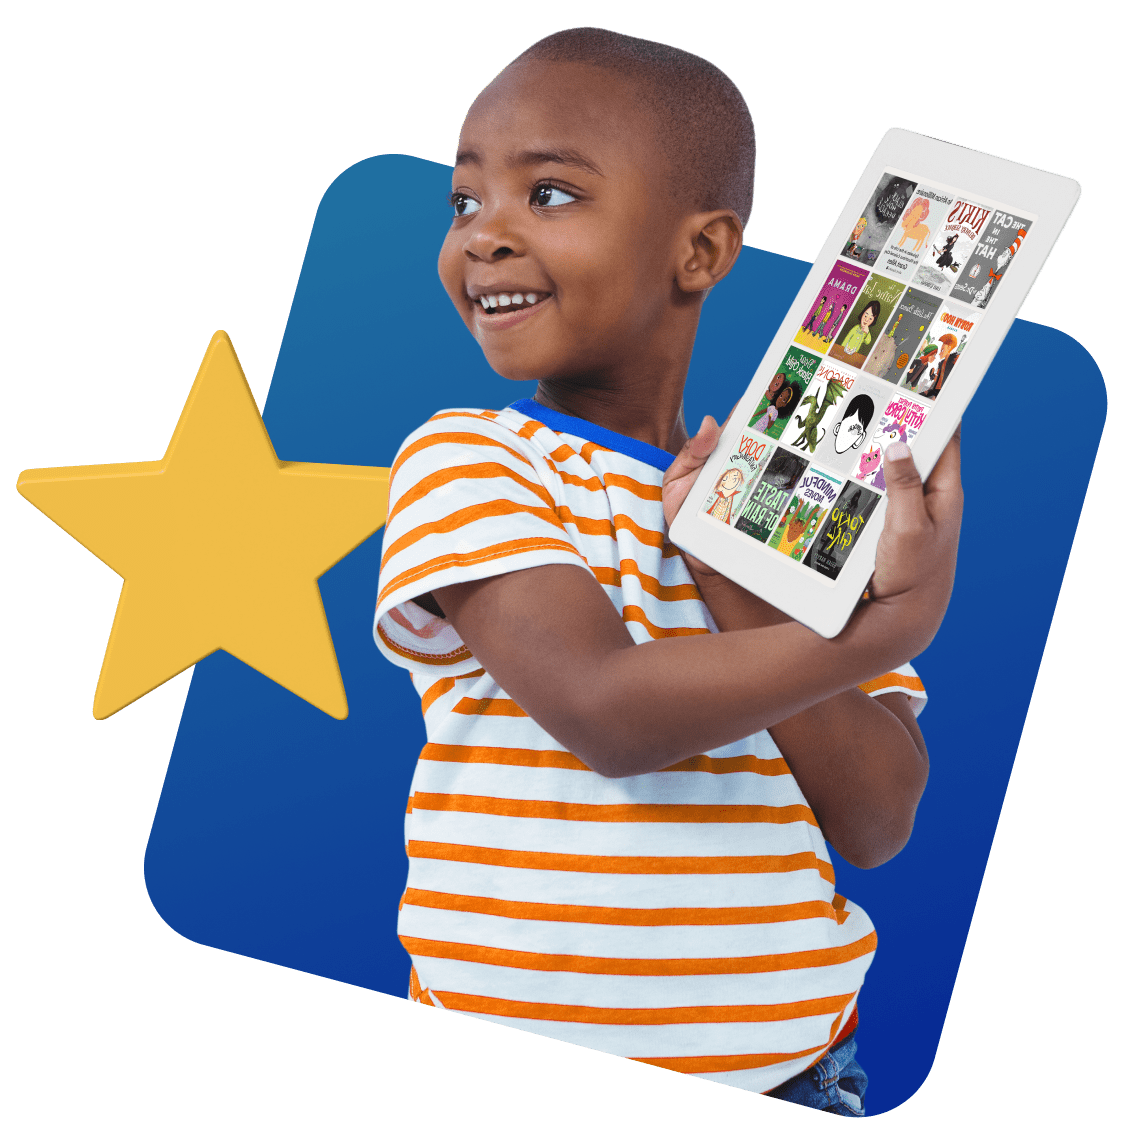 Ohio Online Schools imagen 3 (nombre 3 Young Boy Tablet Star)